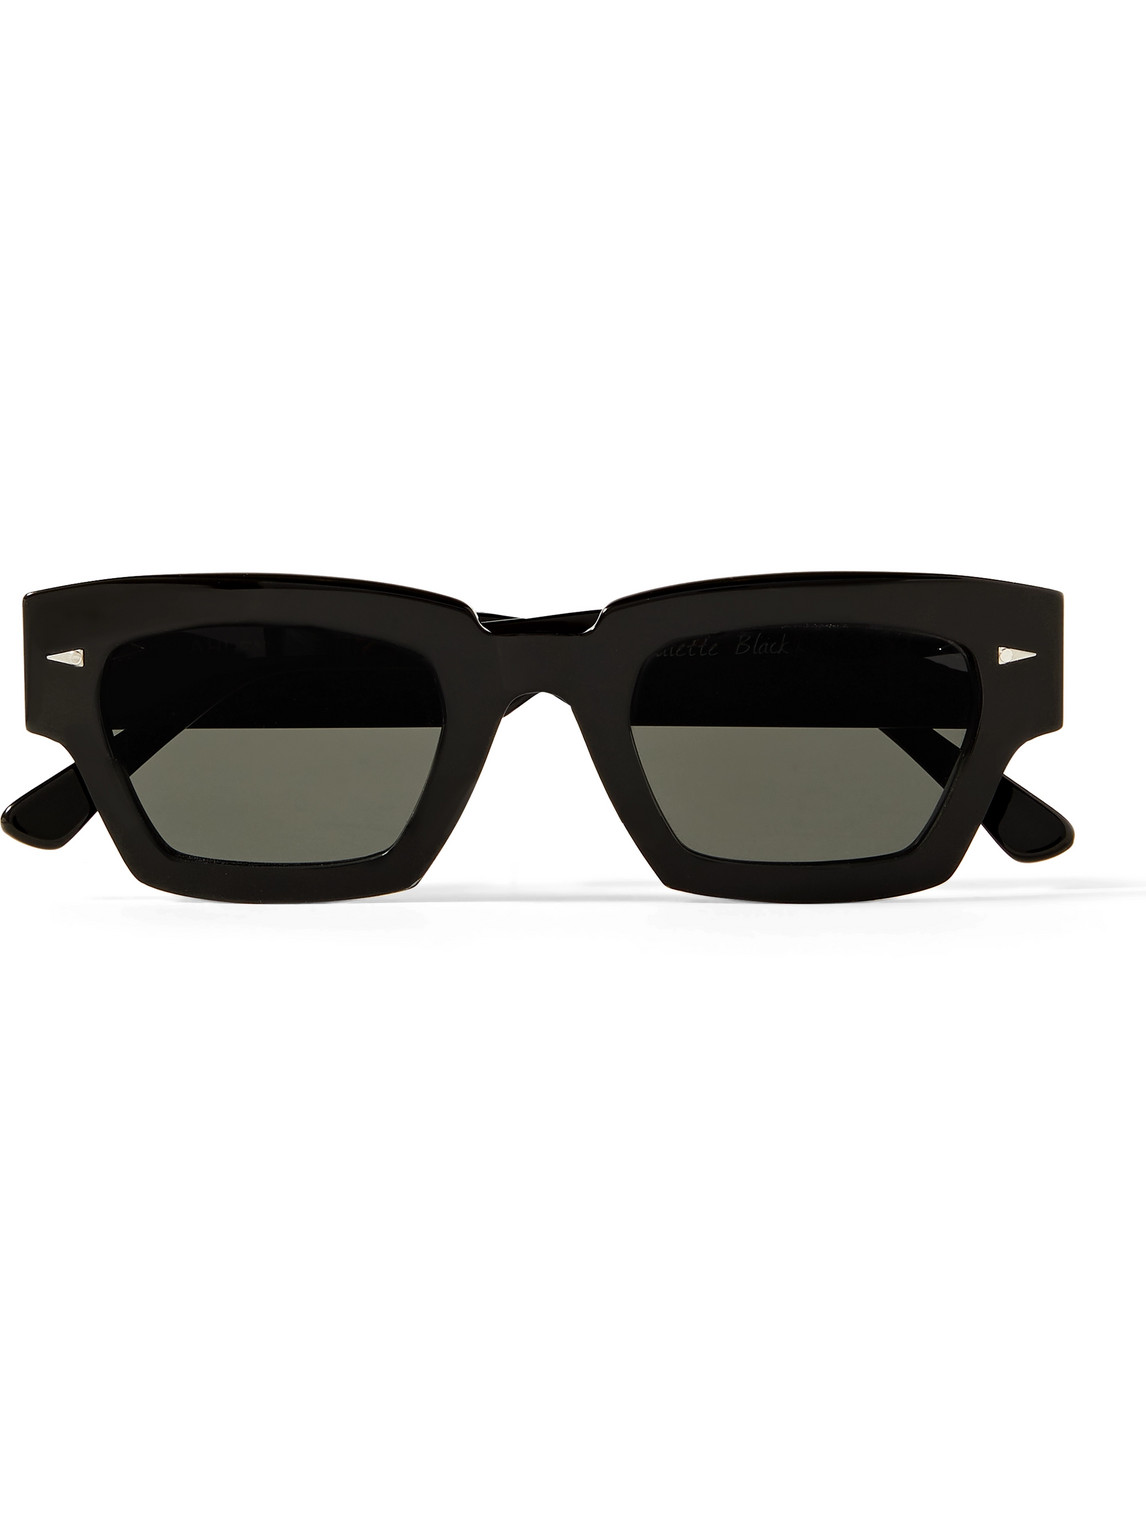 Villette Rectangle-Frame Acetate Sunglasses